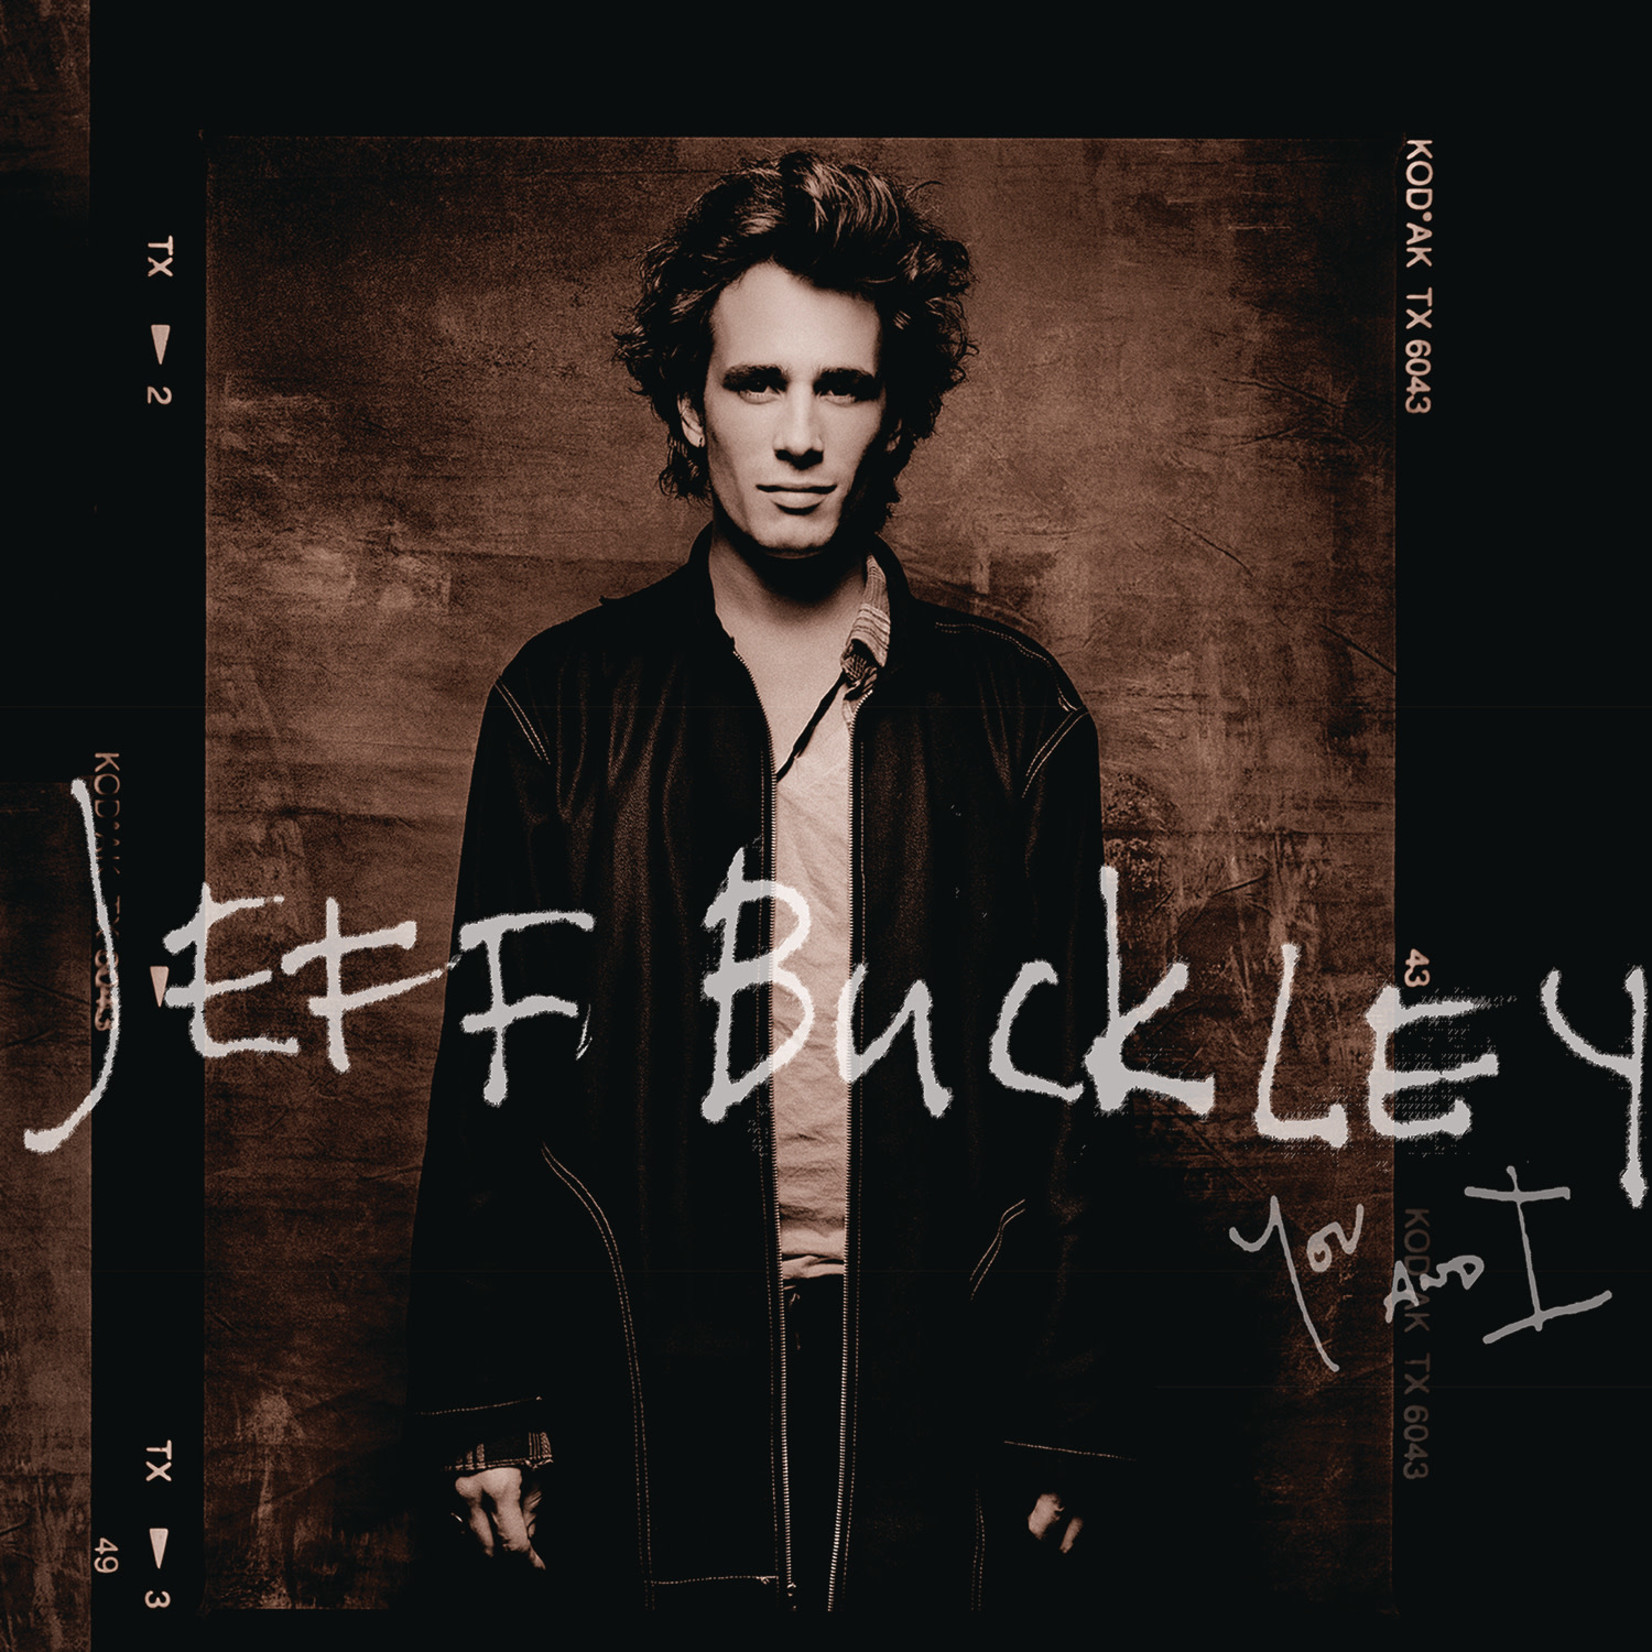 [New] Jeff Buckley - You & I